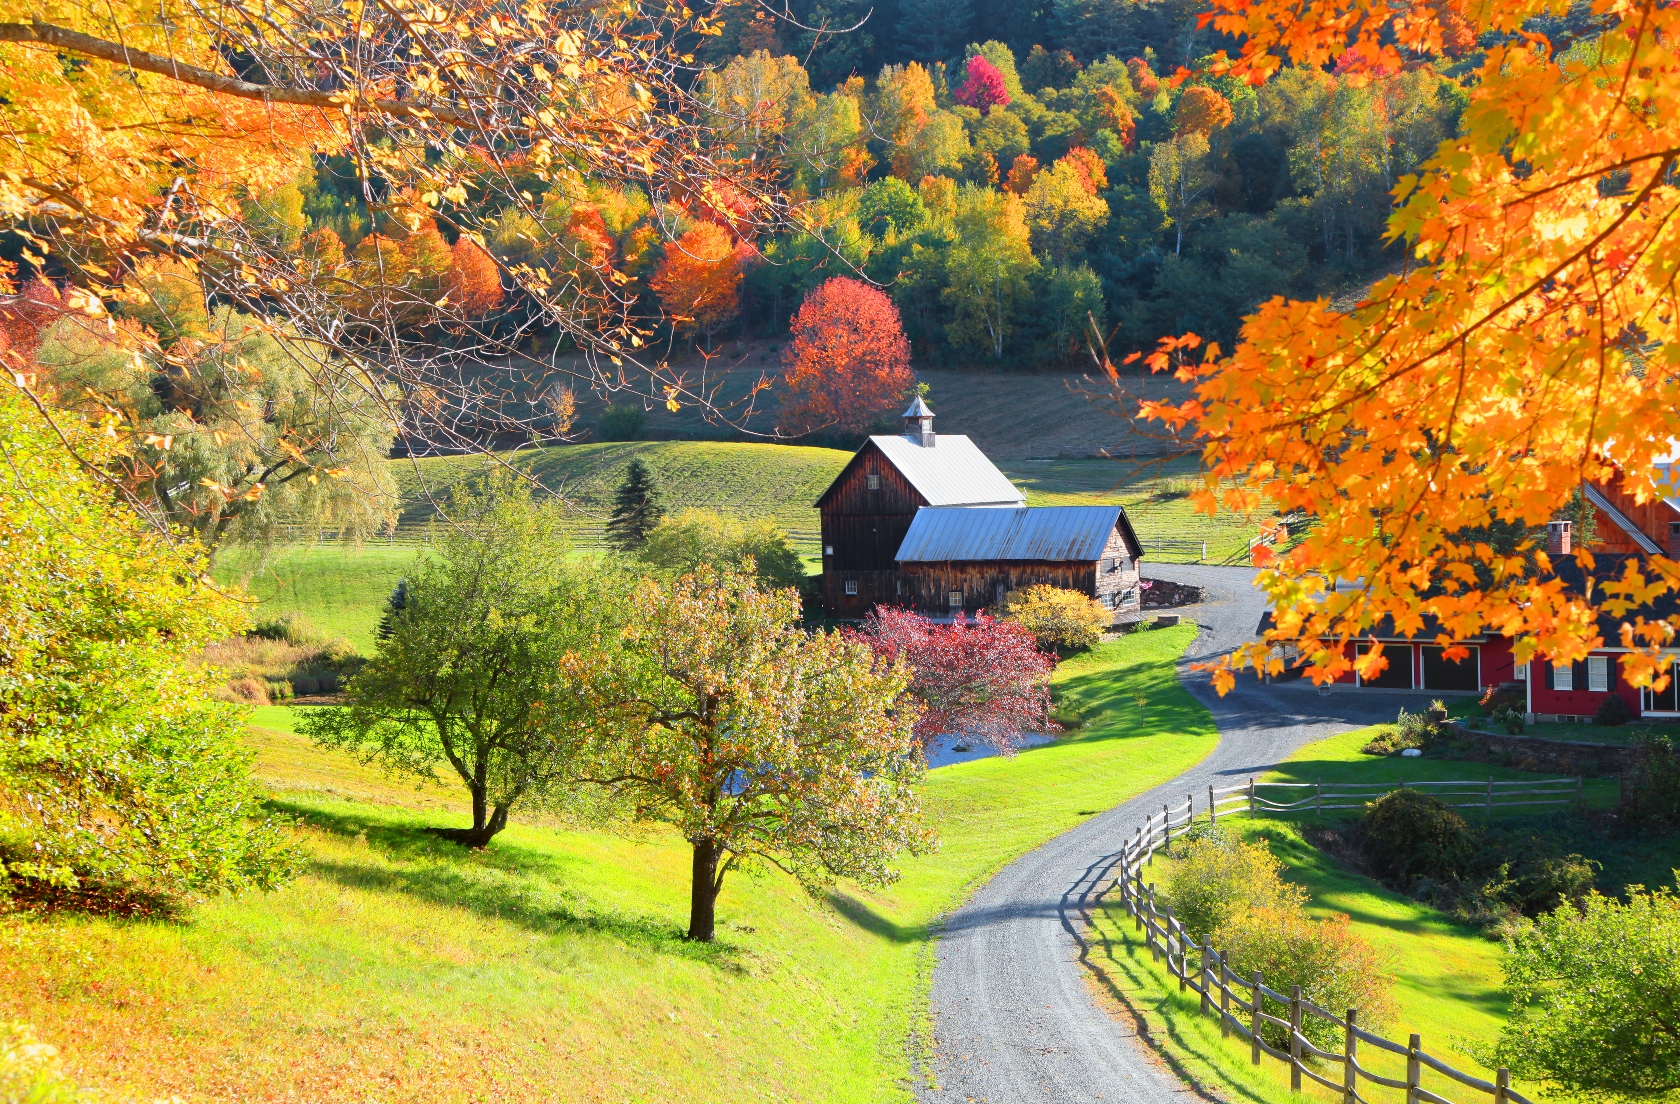 Rural scene of Vermont, USA